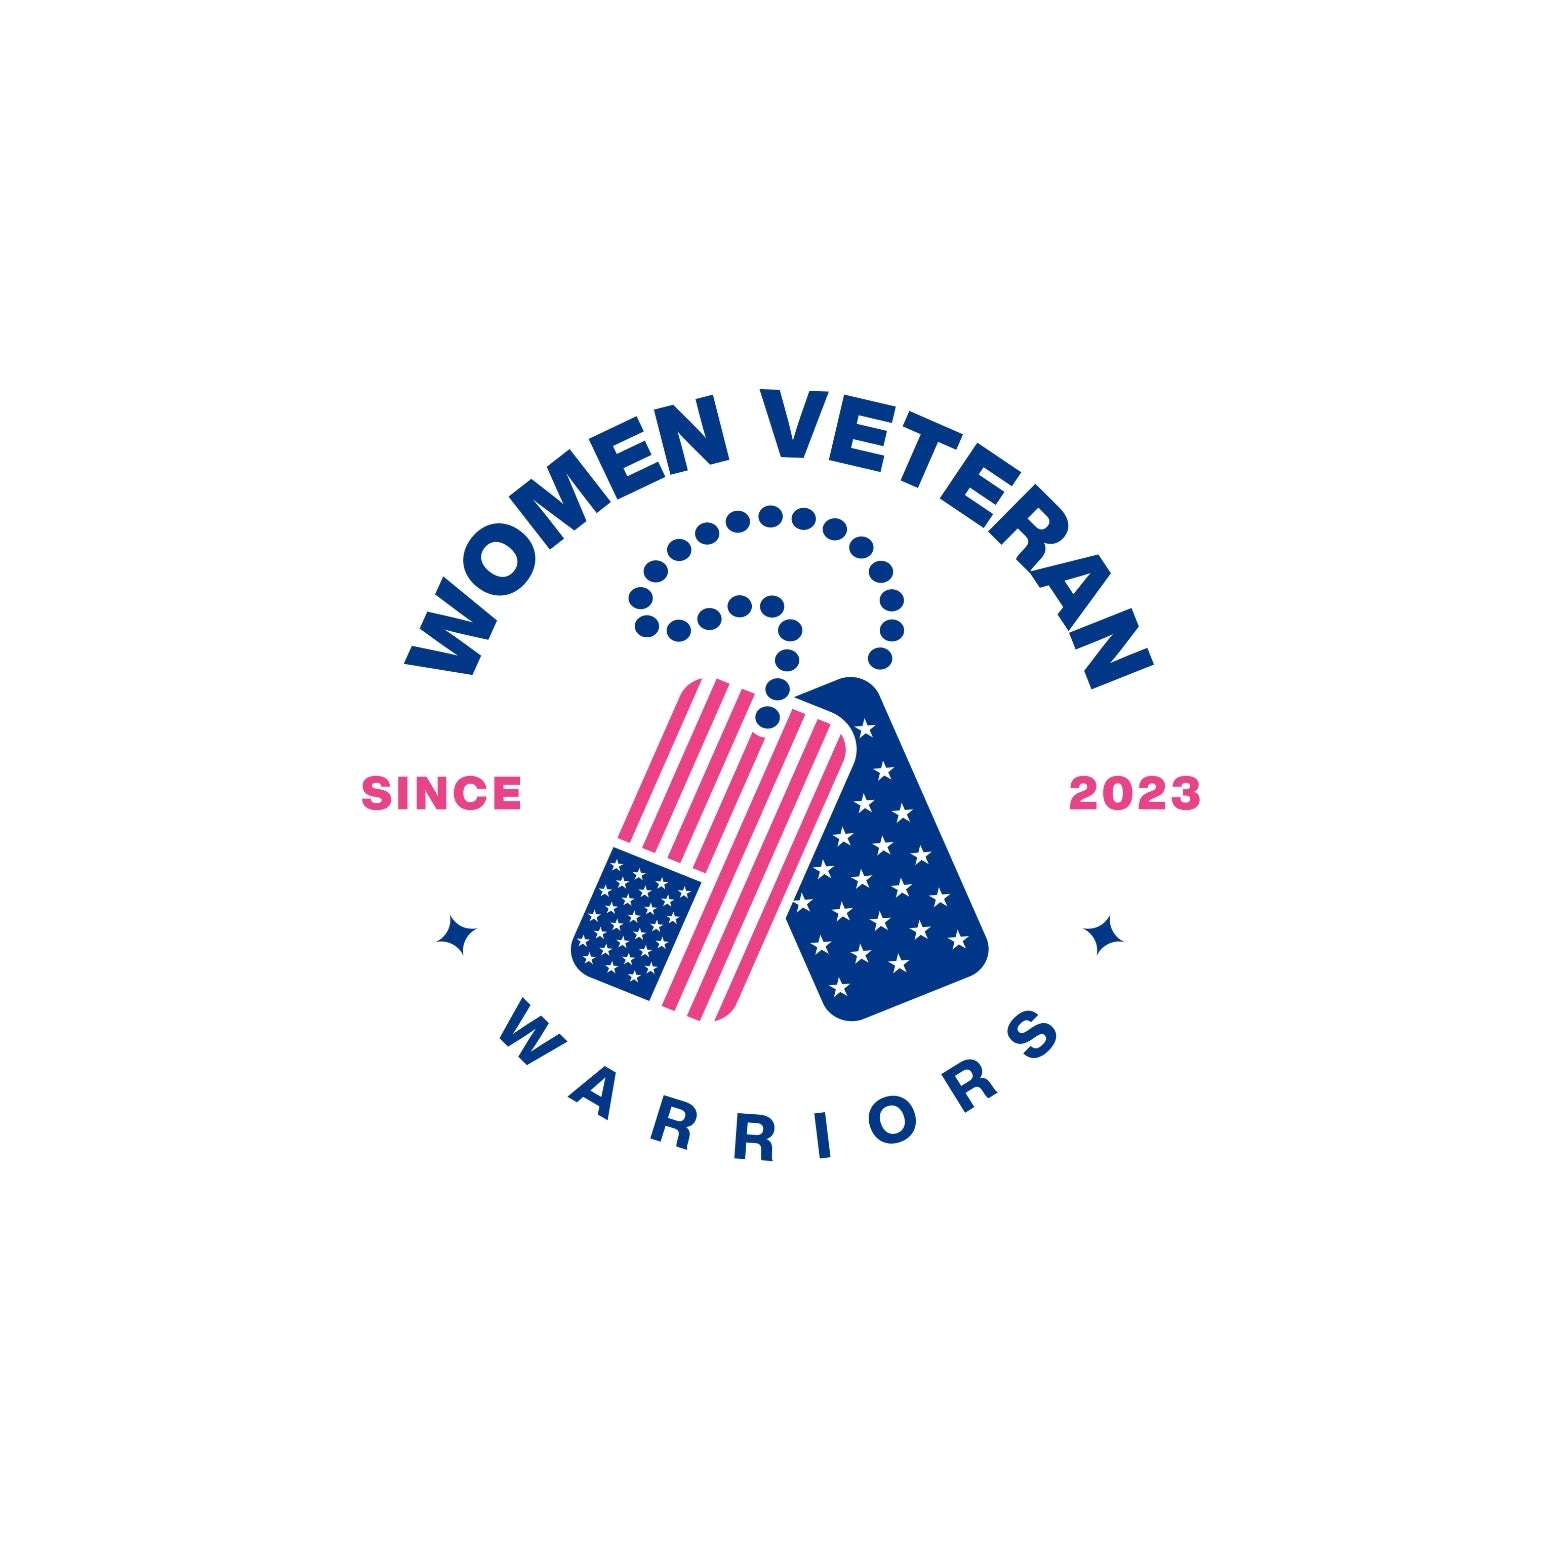 Women Veteran Warriors